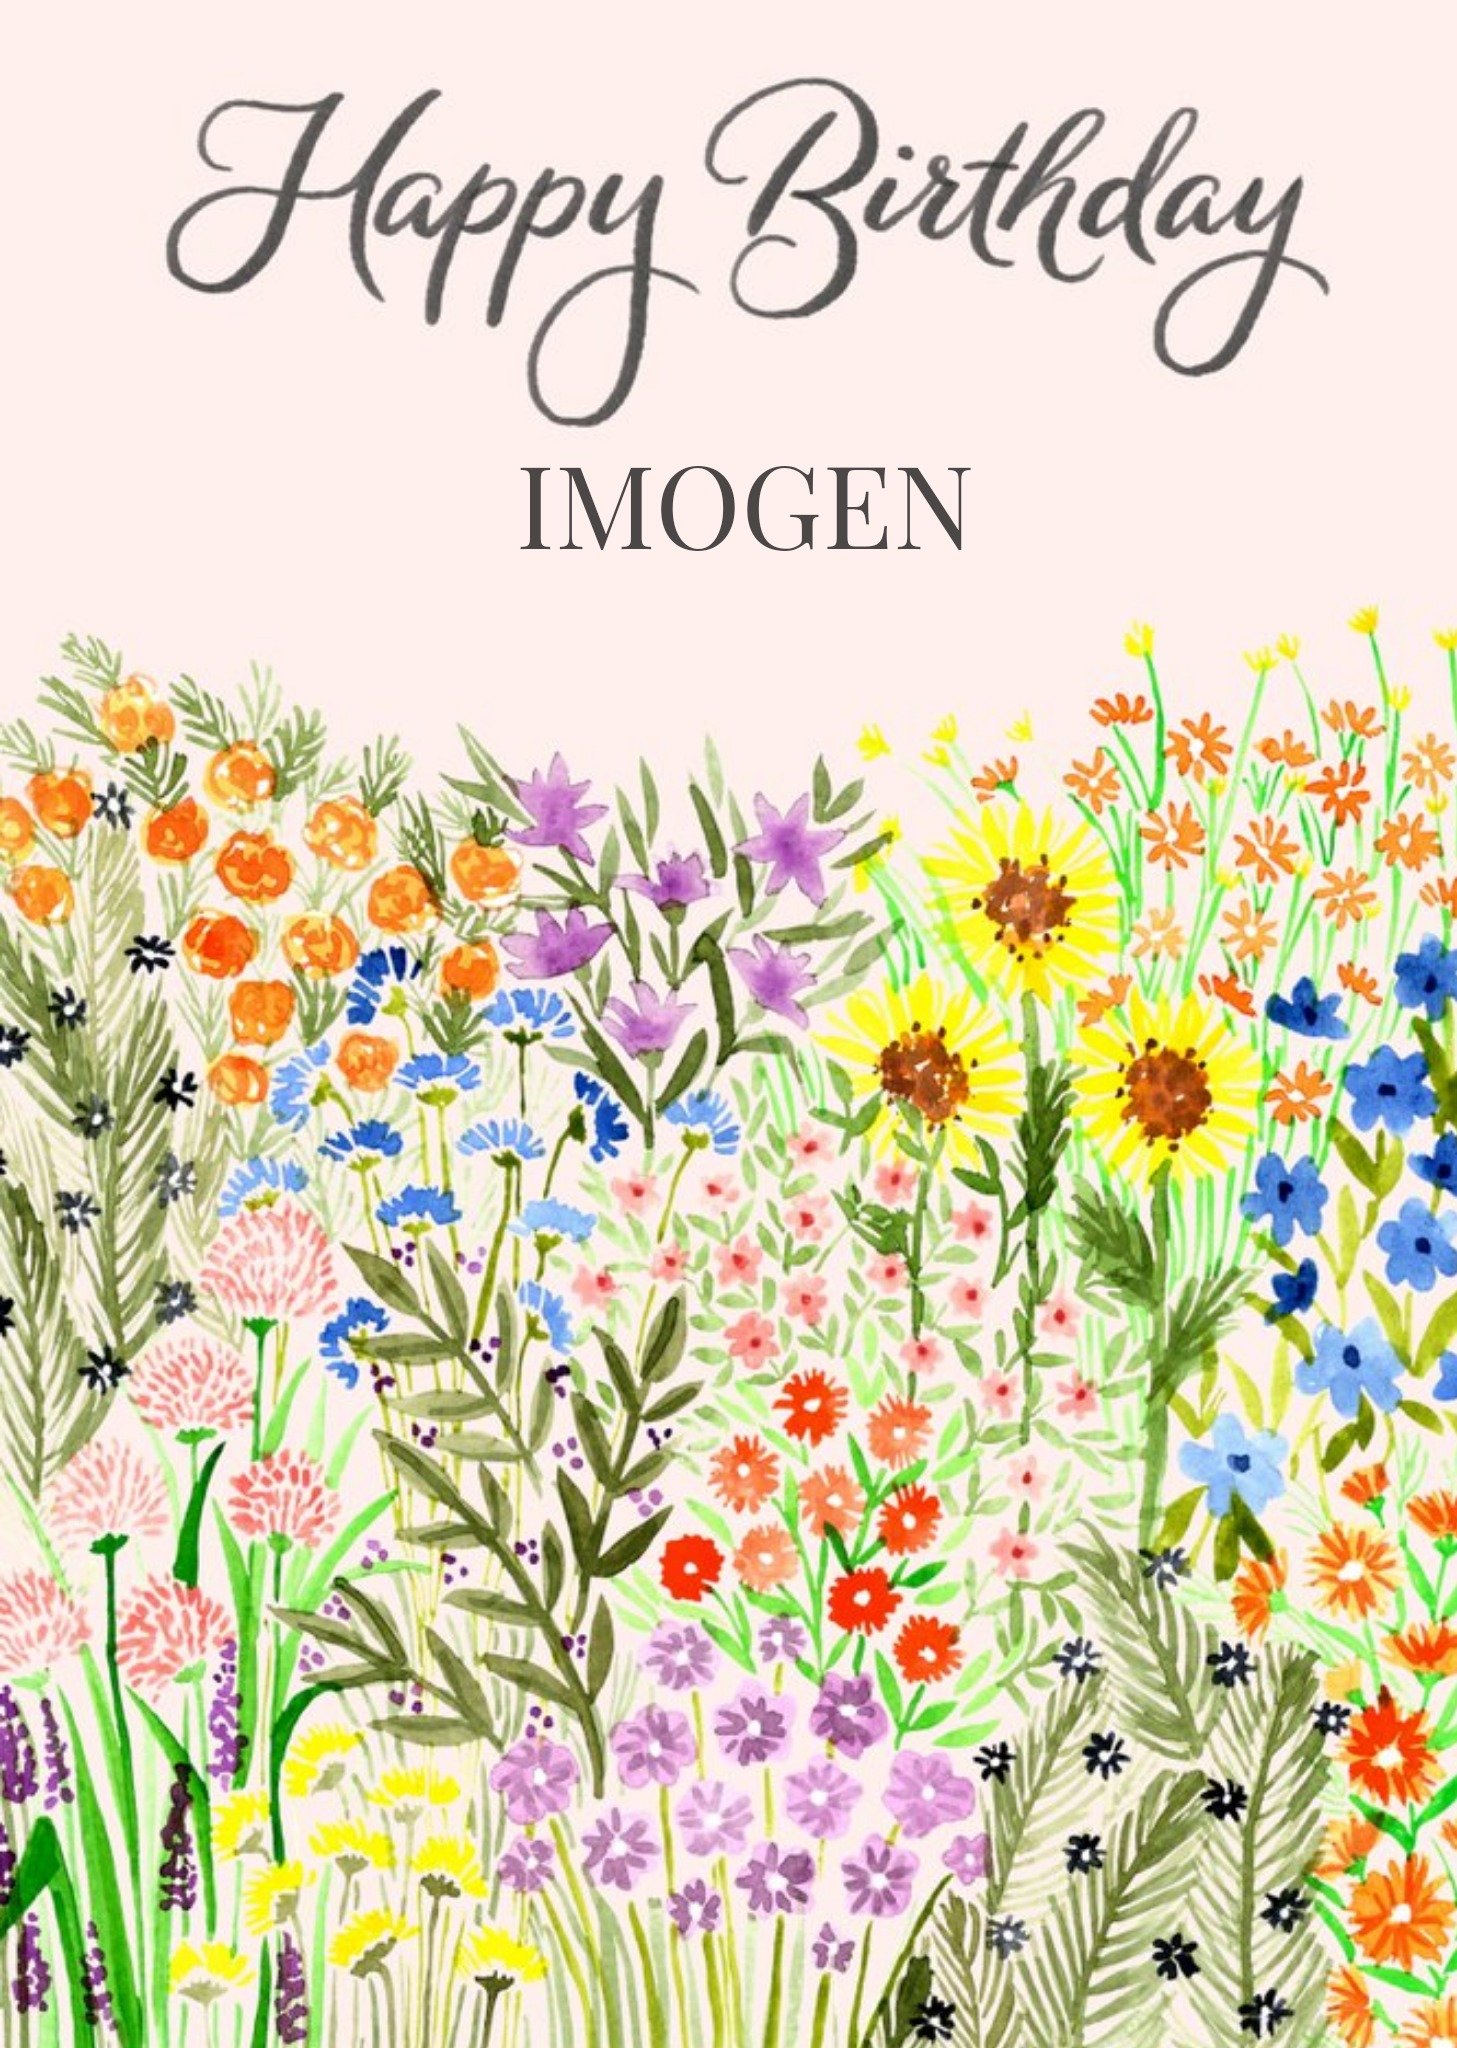 Okey Dokey Design Illustration Of A Wild Flower Meadow Birthday Card, Standard